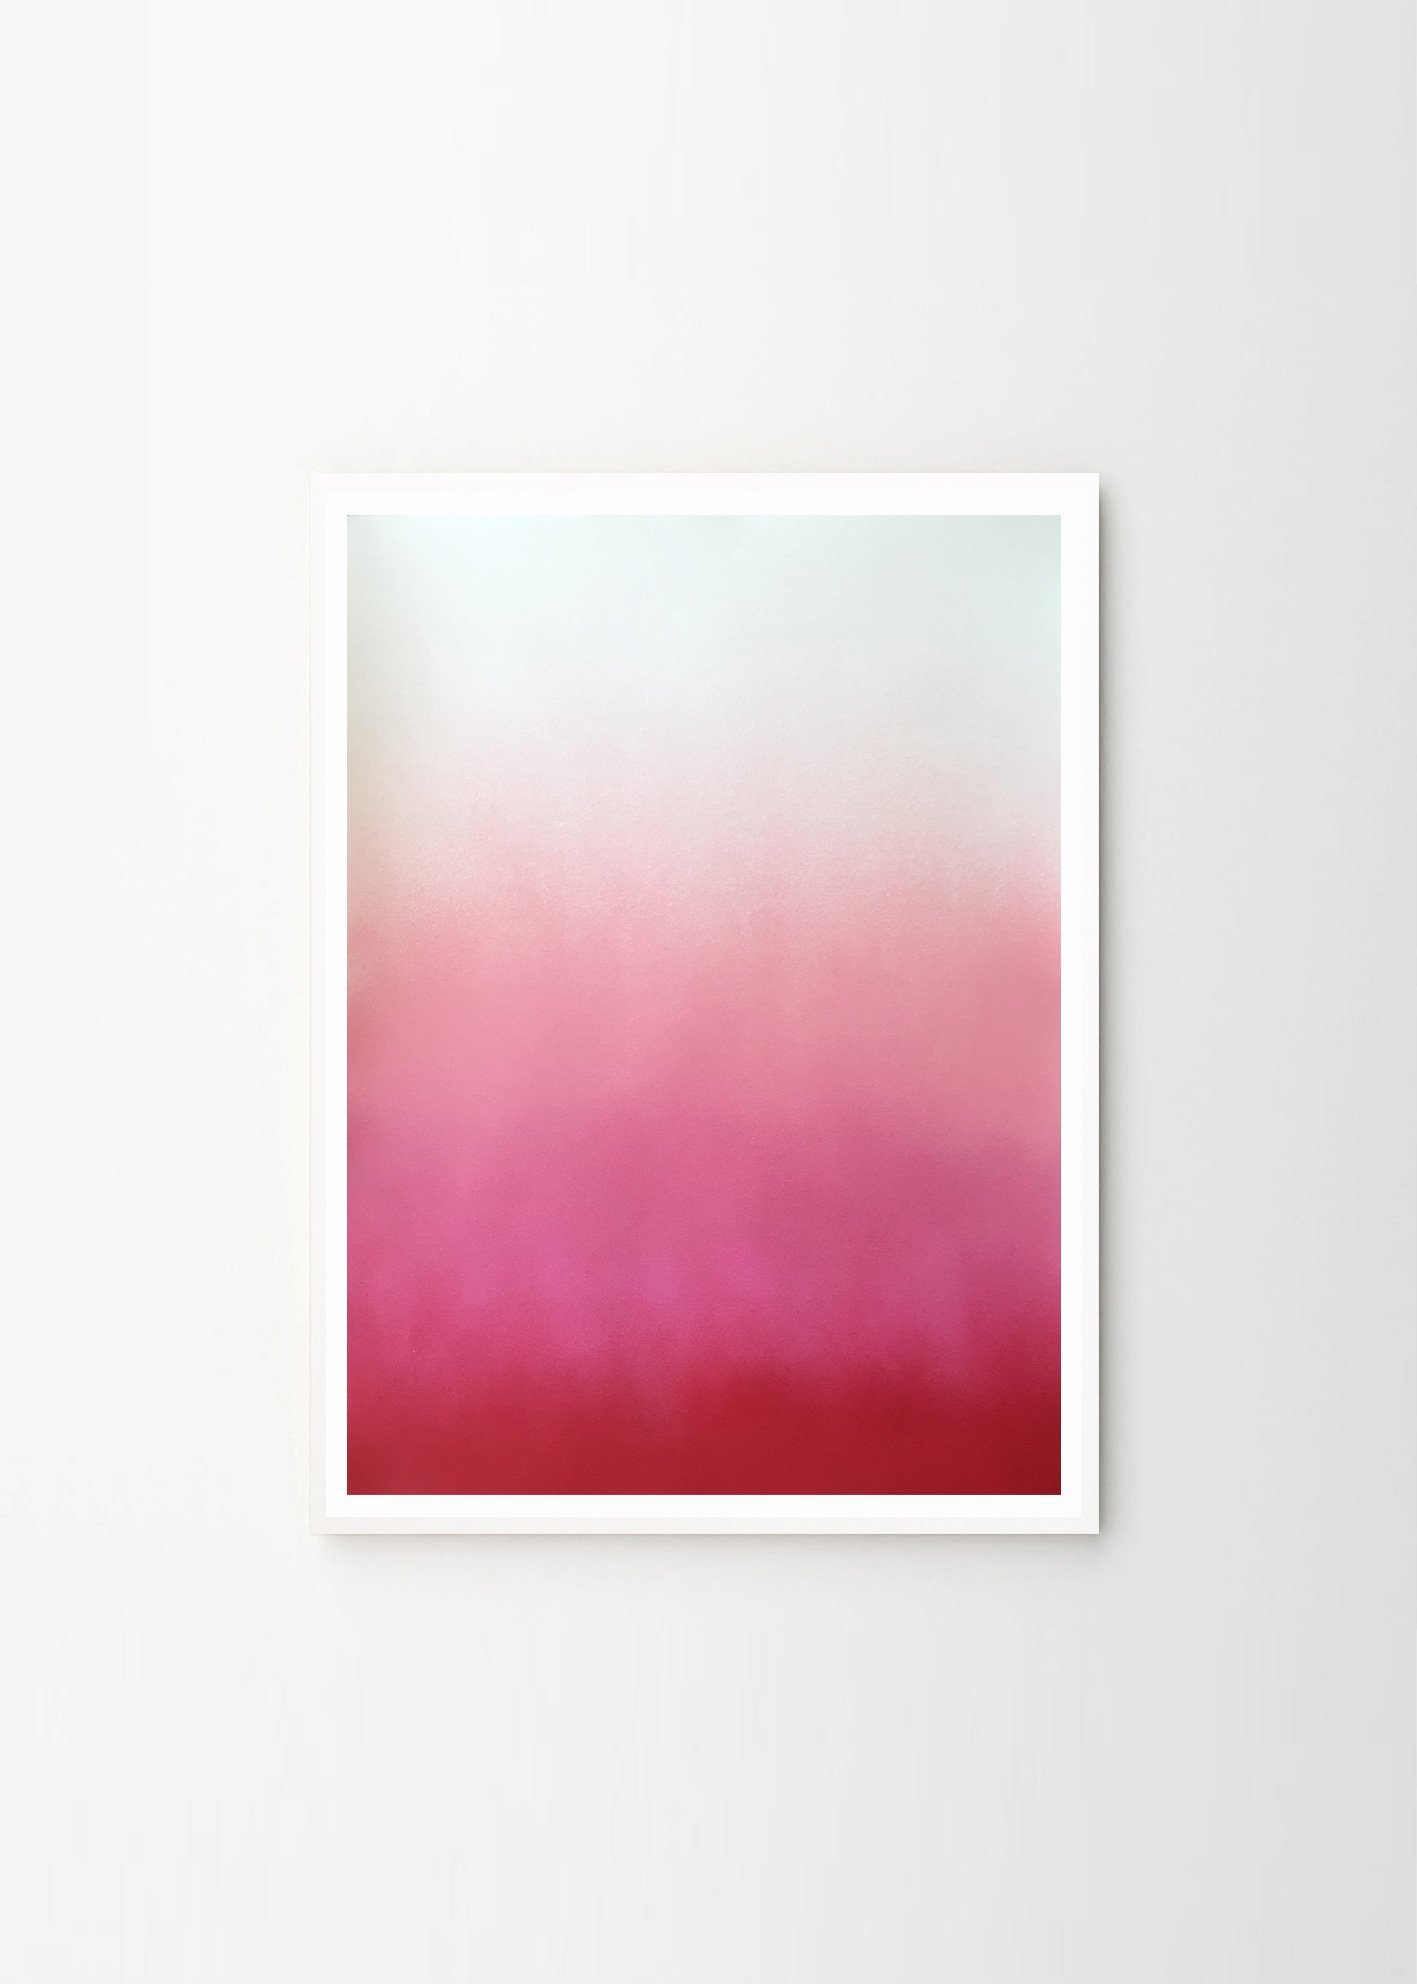 anne-nowak-hazy-pink-frame-white.jpg